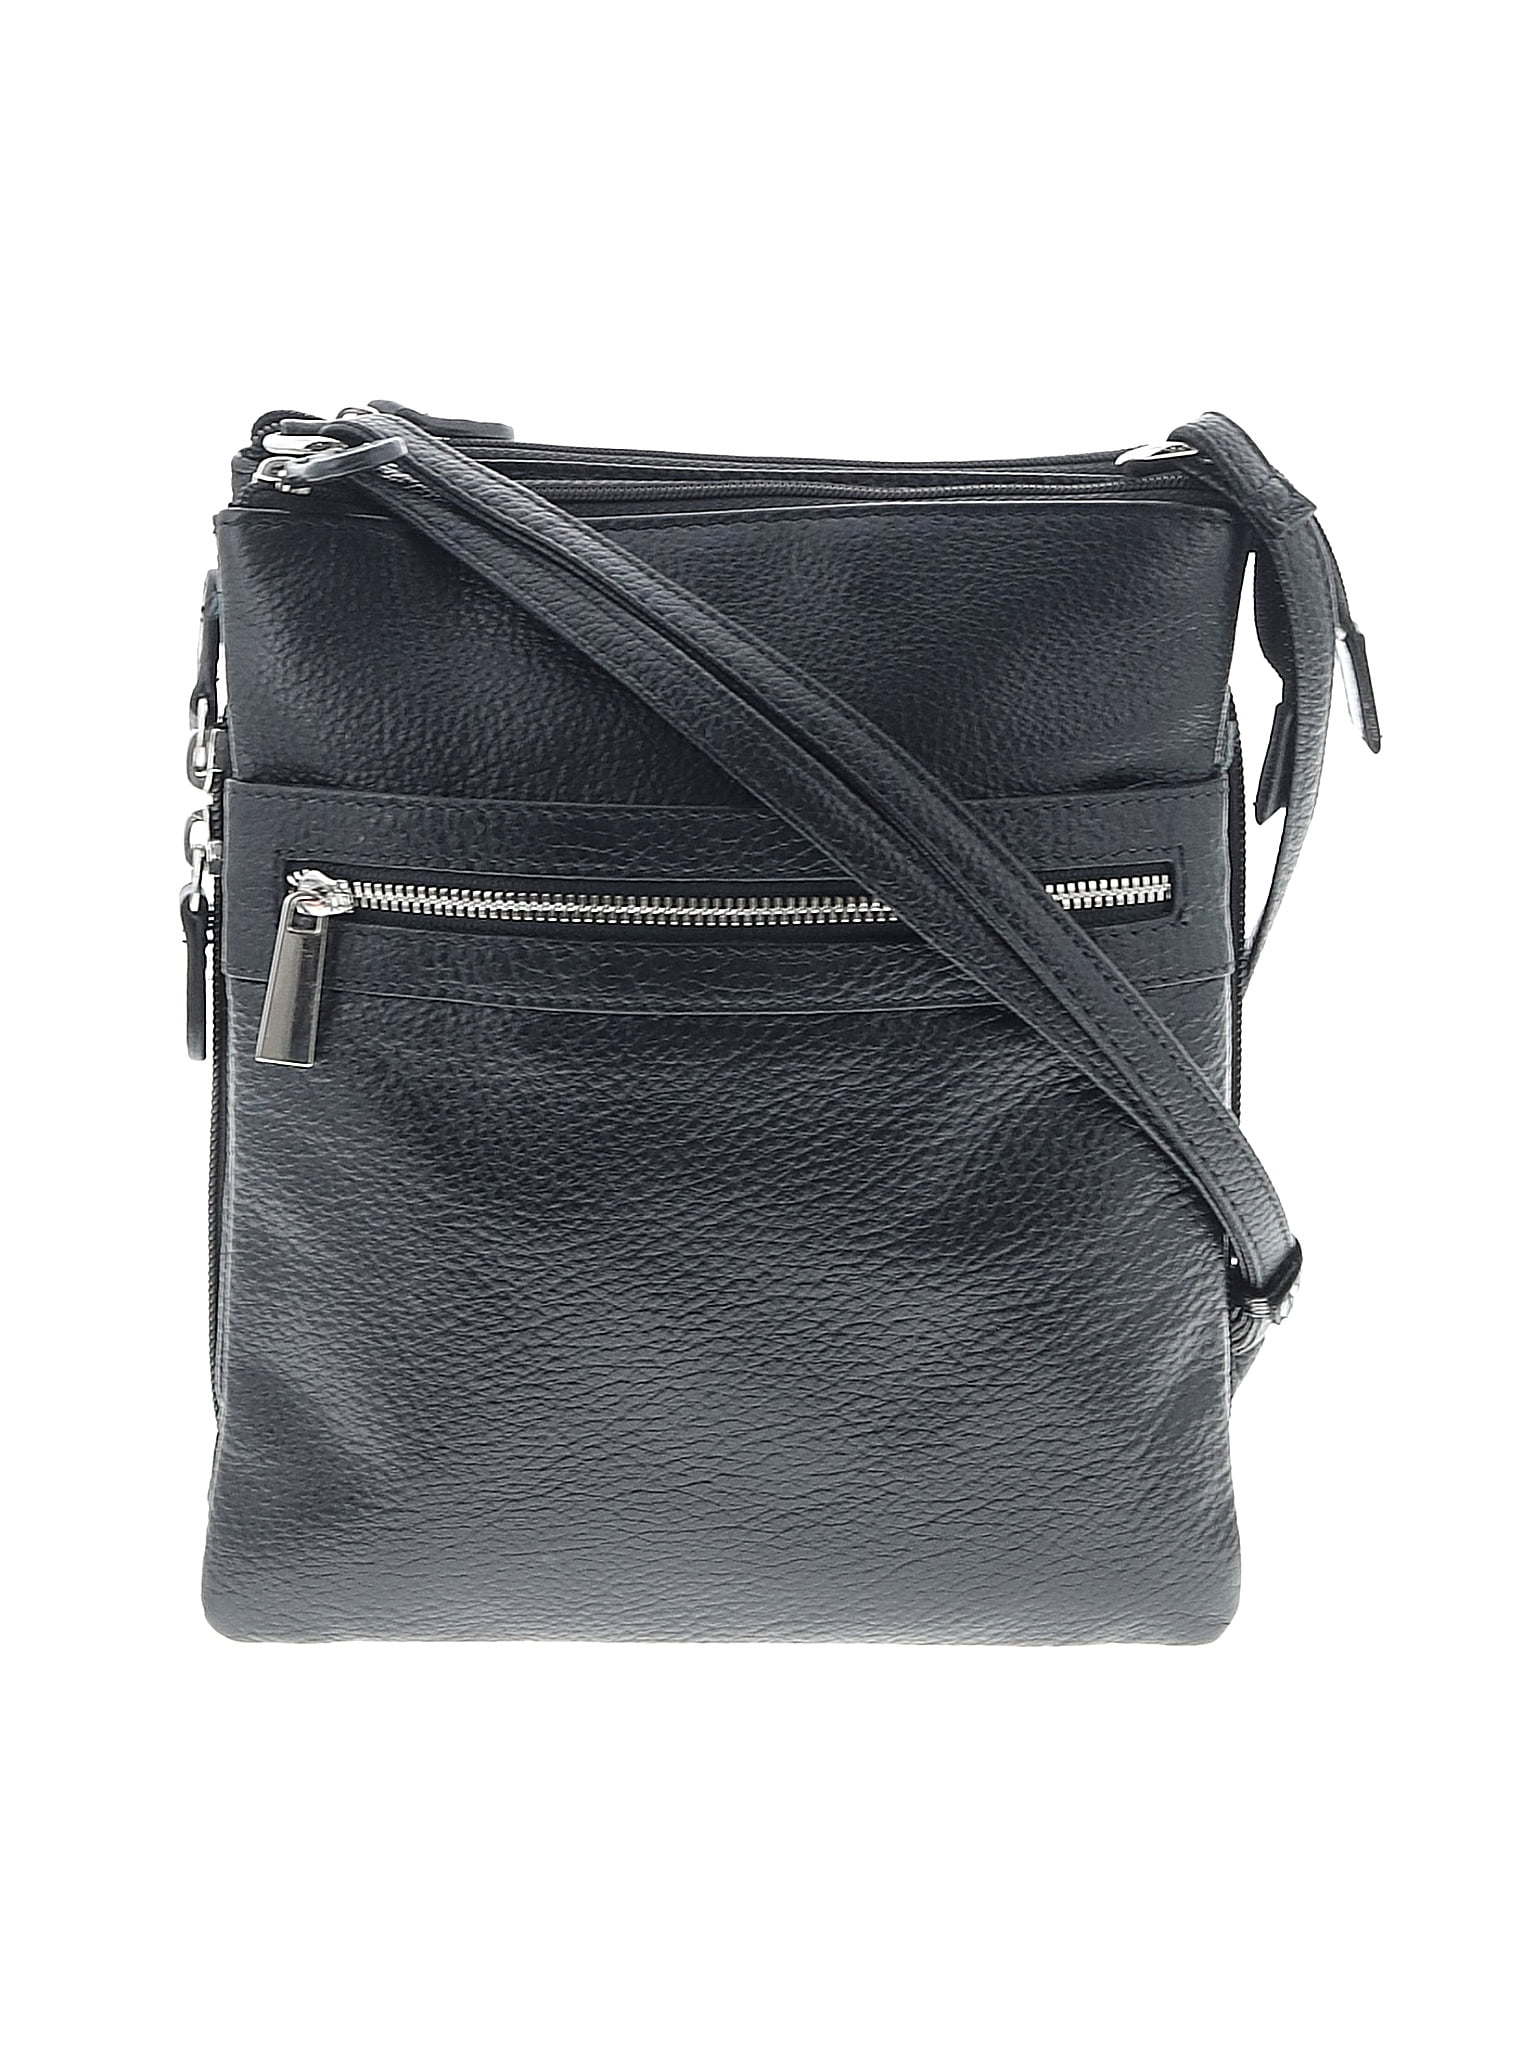 Giani Bernini Gray Leather Crossbody Bag One Size - 71% off | thredUP